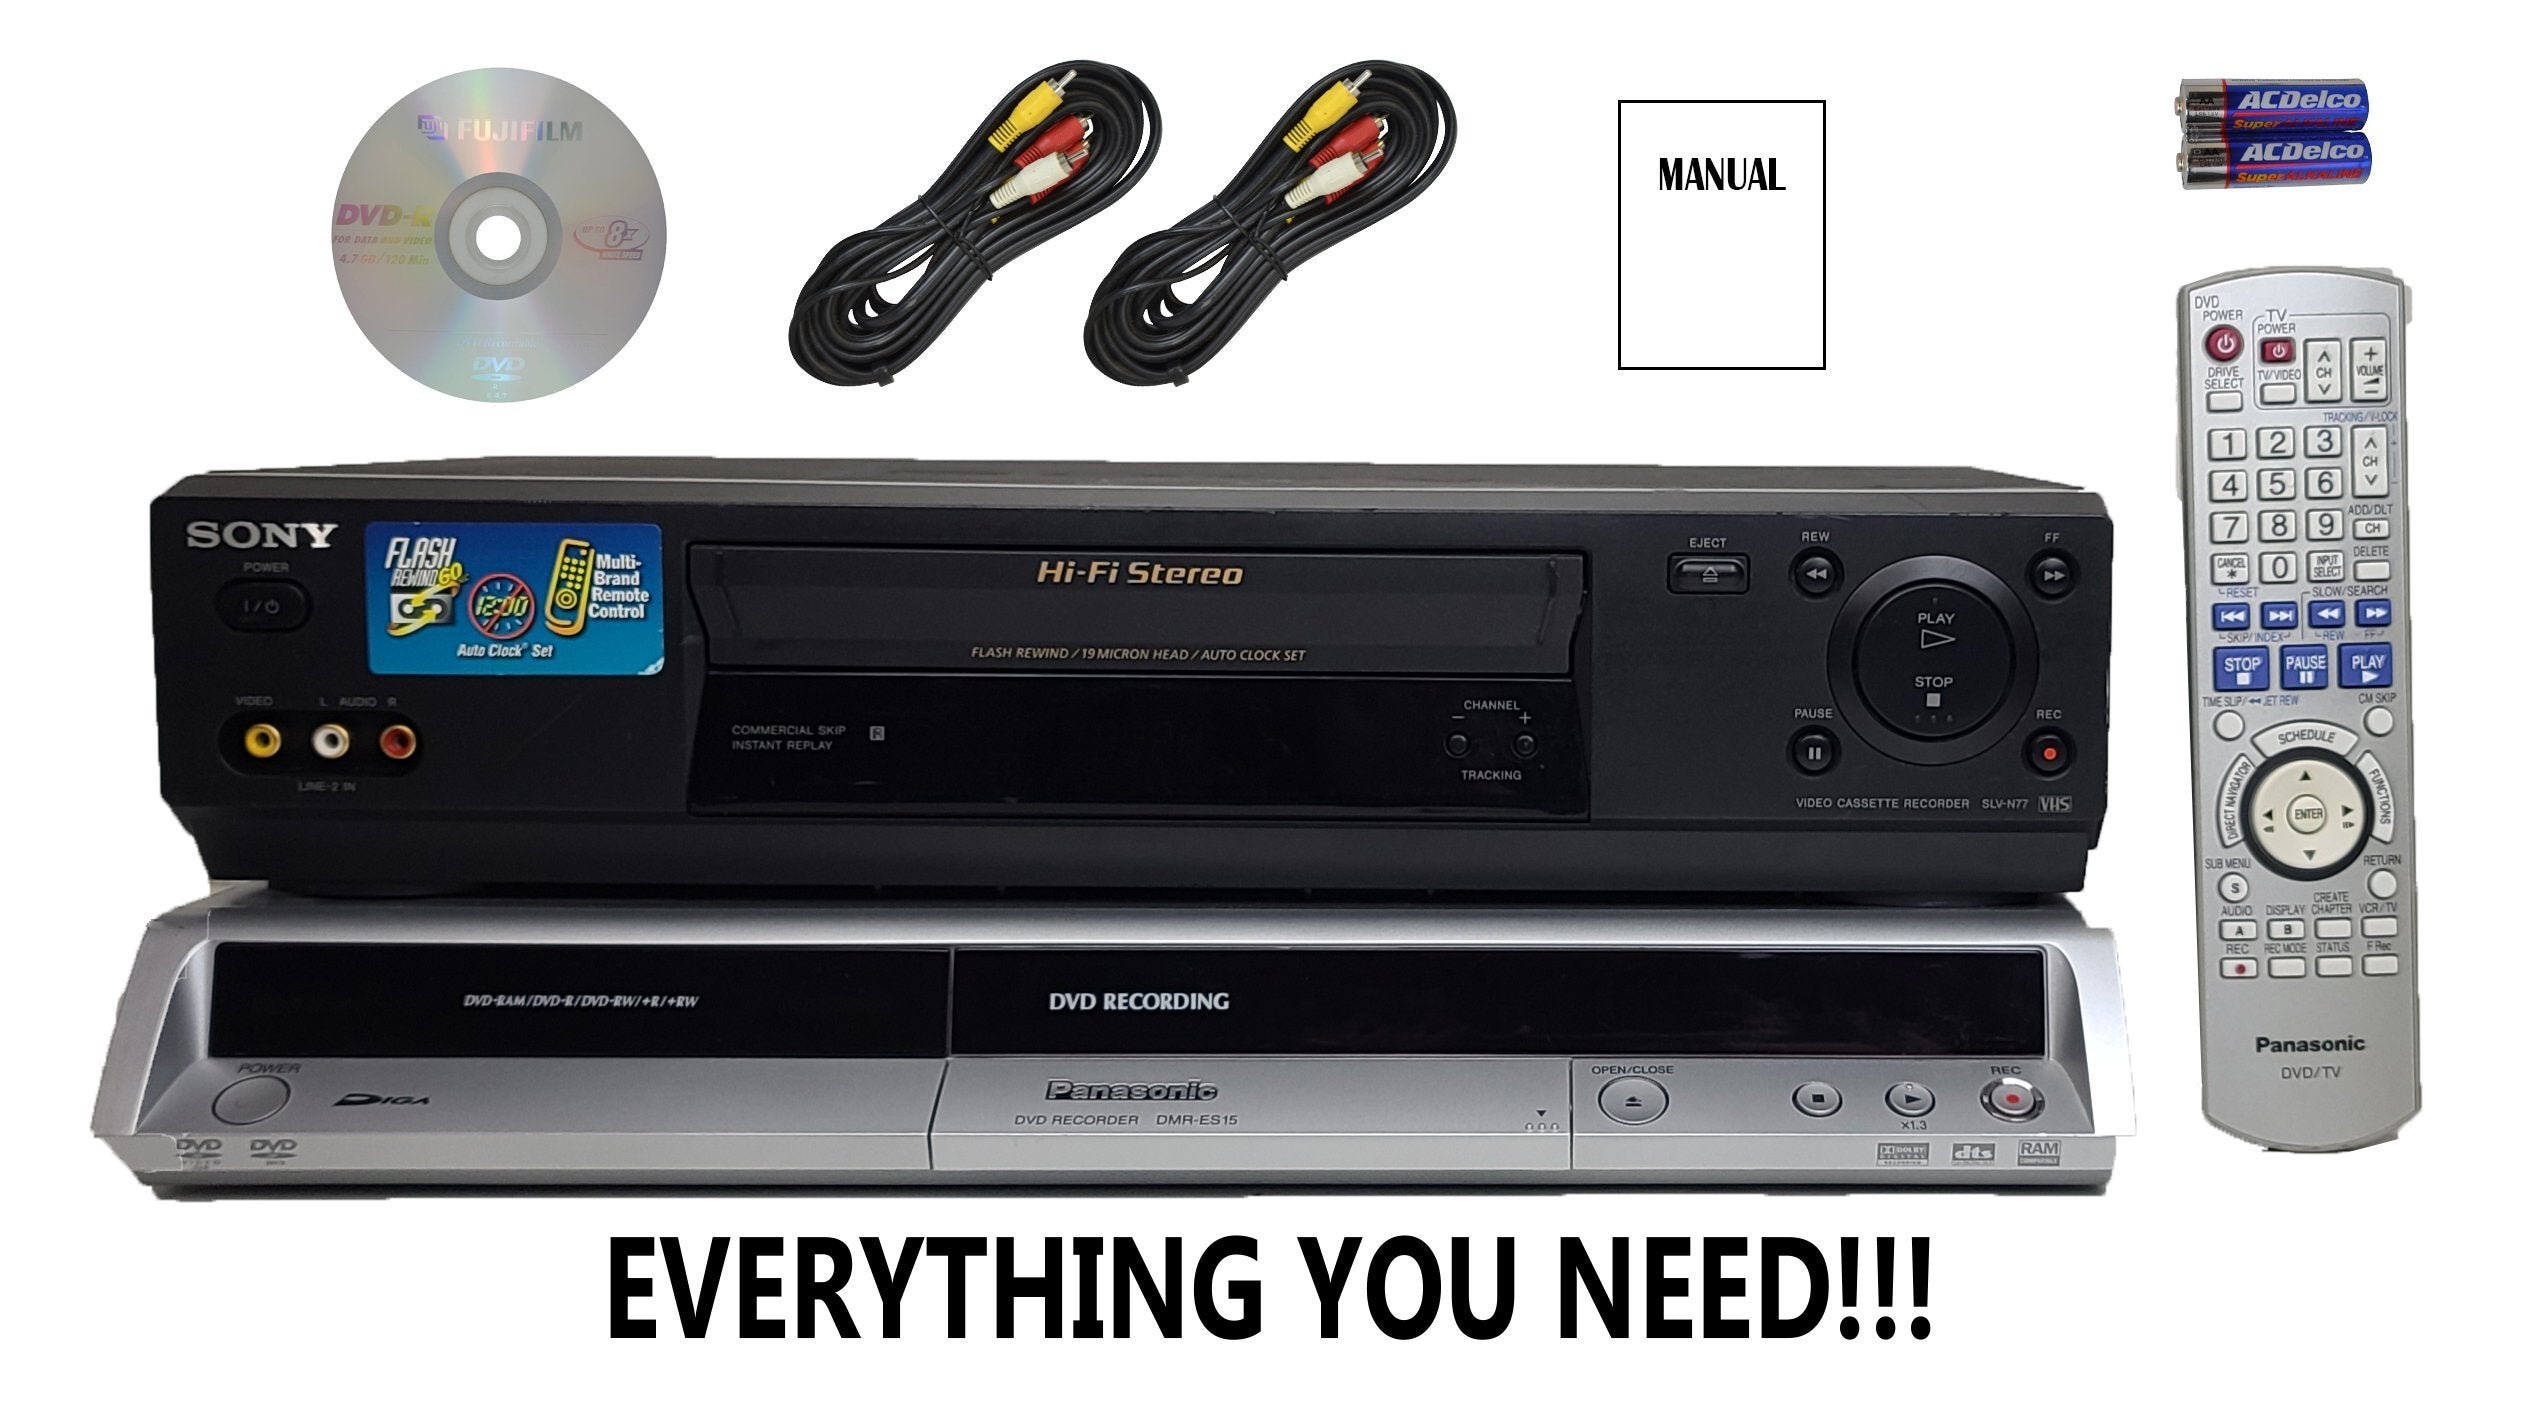 VHS to DVD Converter Kit Item) Convert your VHS tape